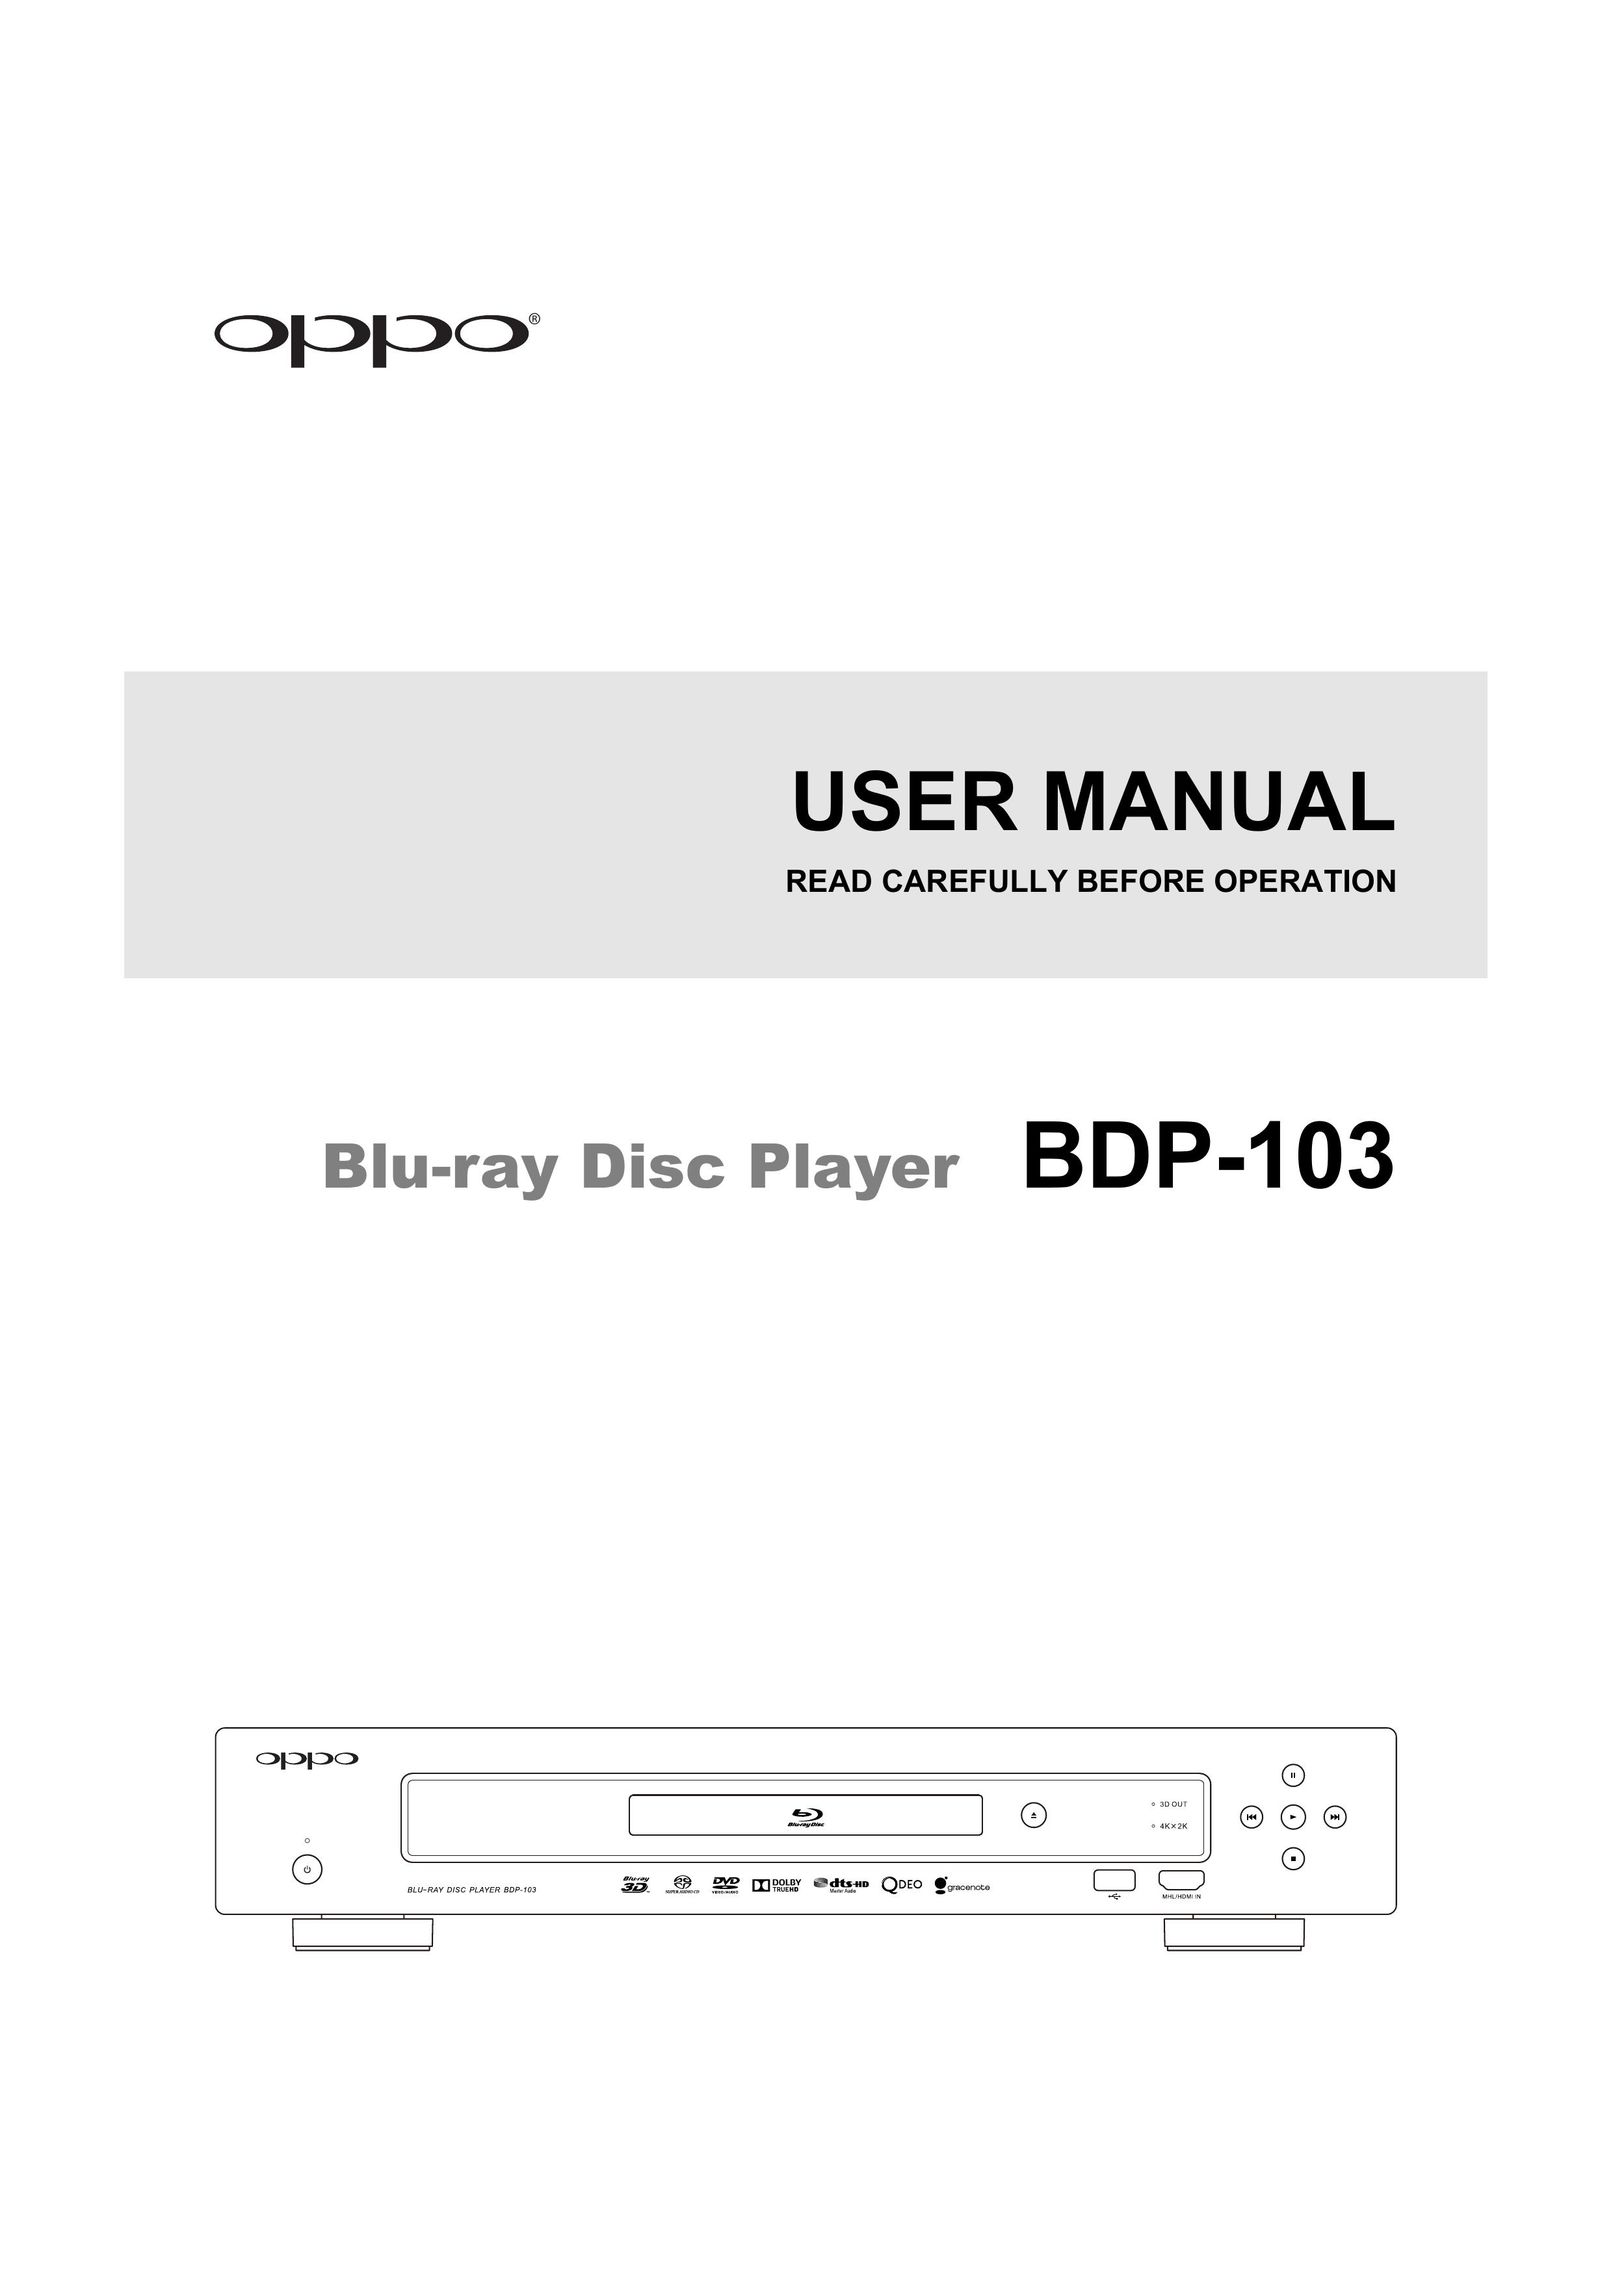 OPPO Digital BDP-103 Blu-ray Player User Manual